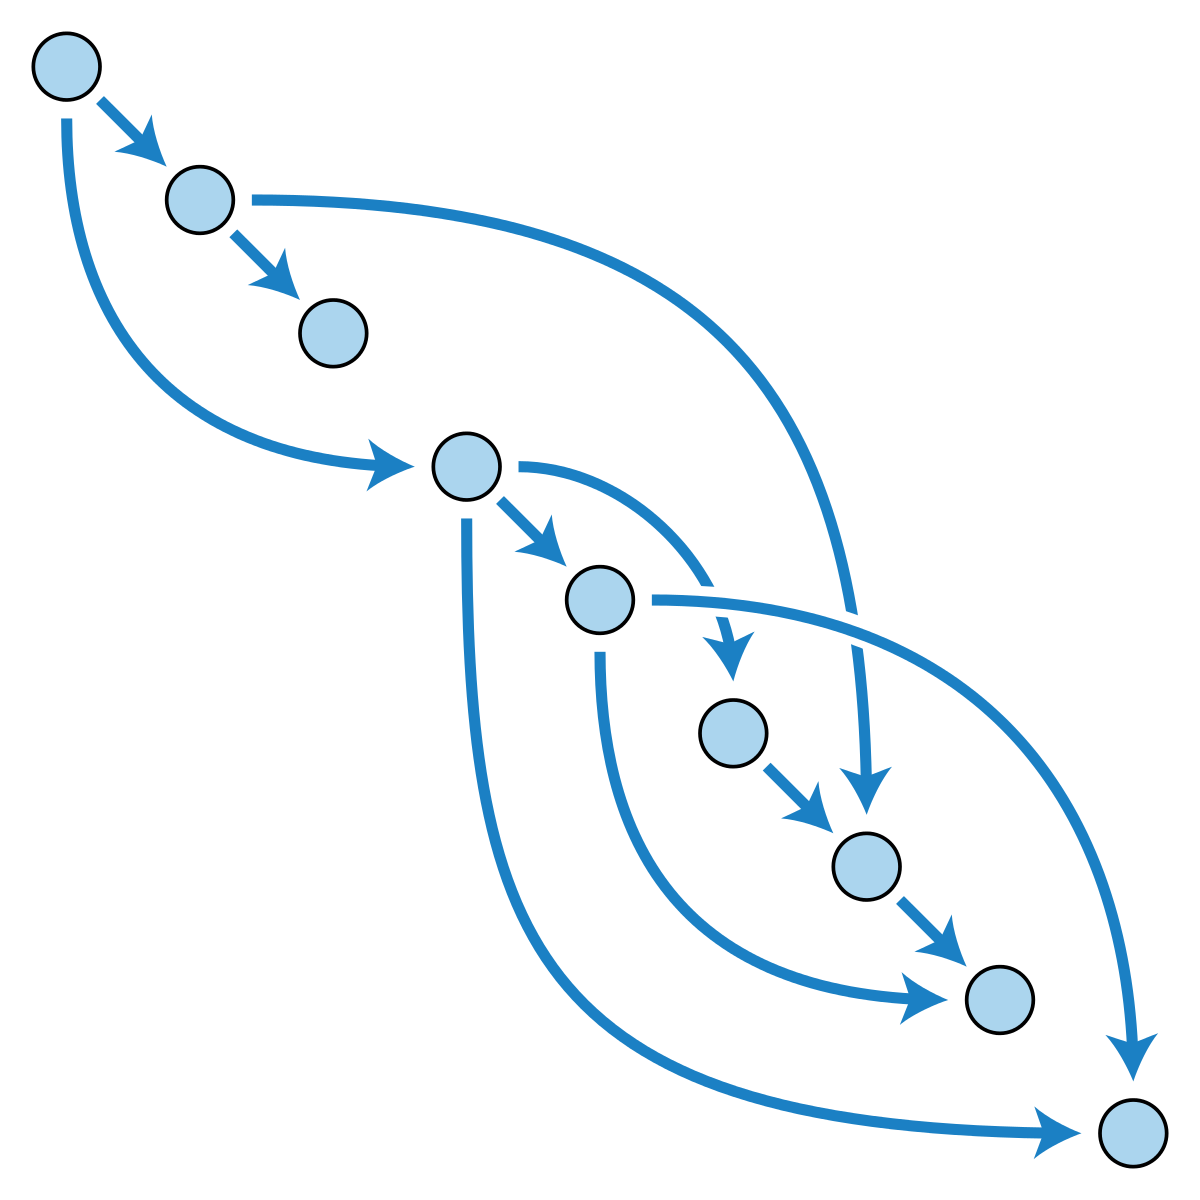 Directed acyclic graph - Wikipedia